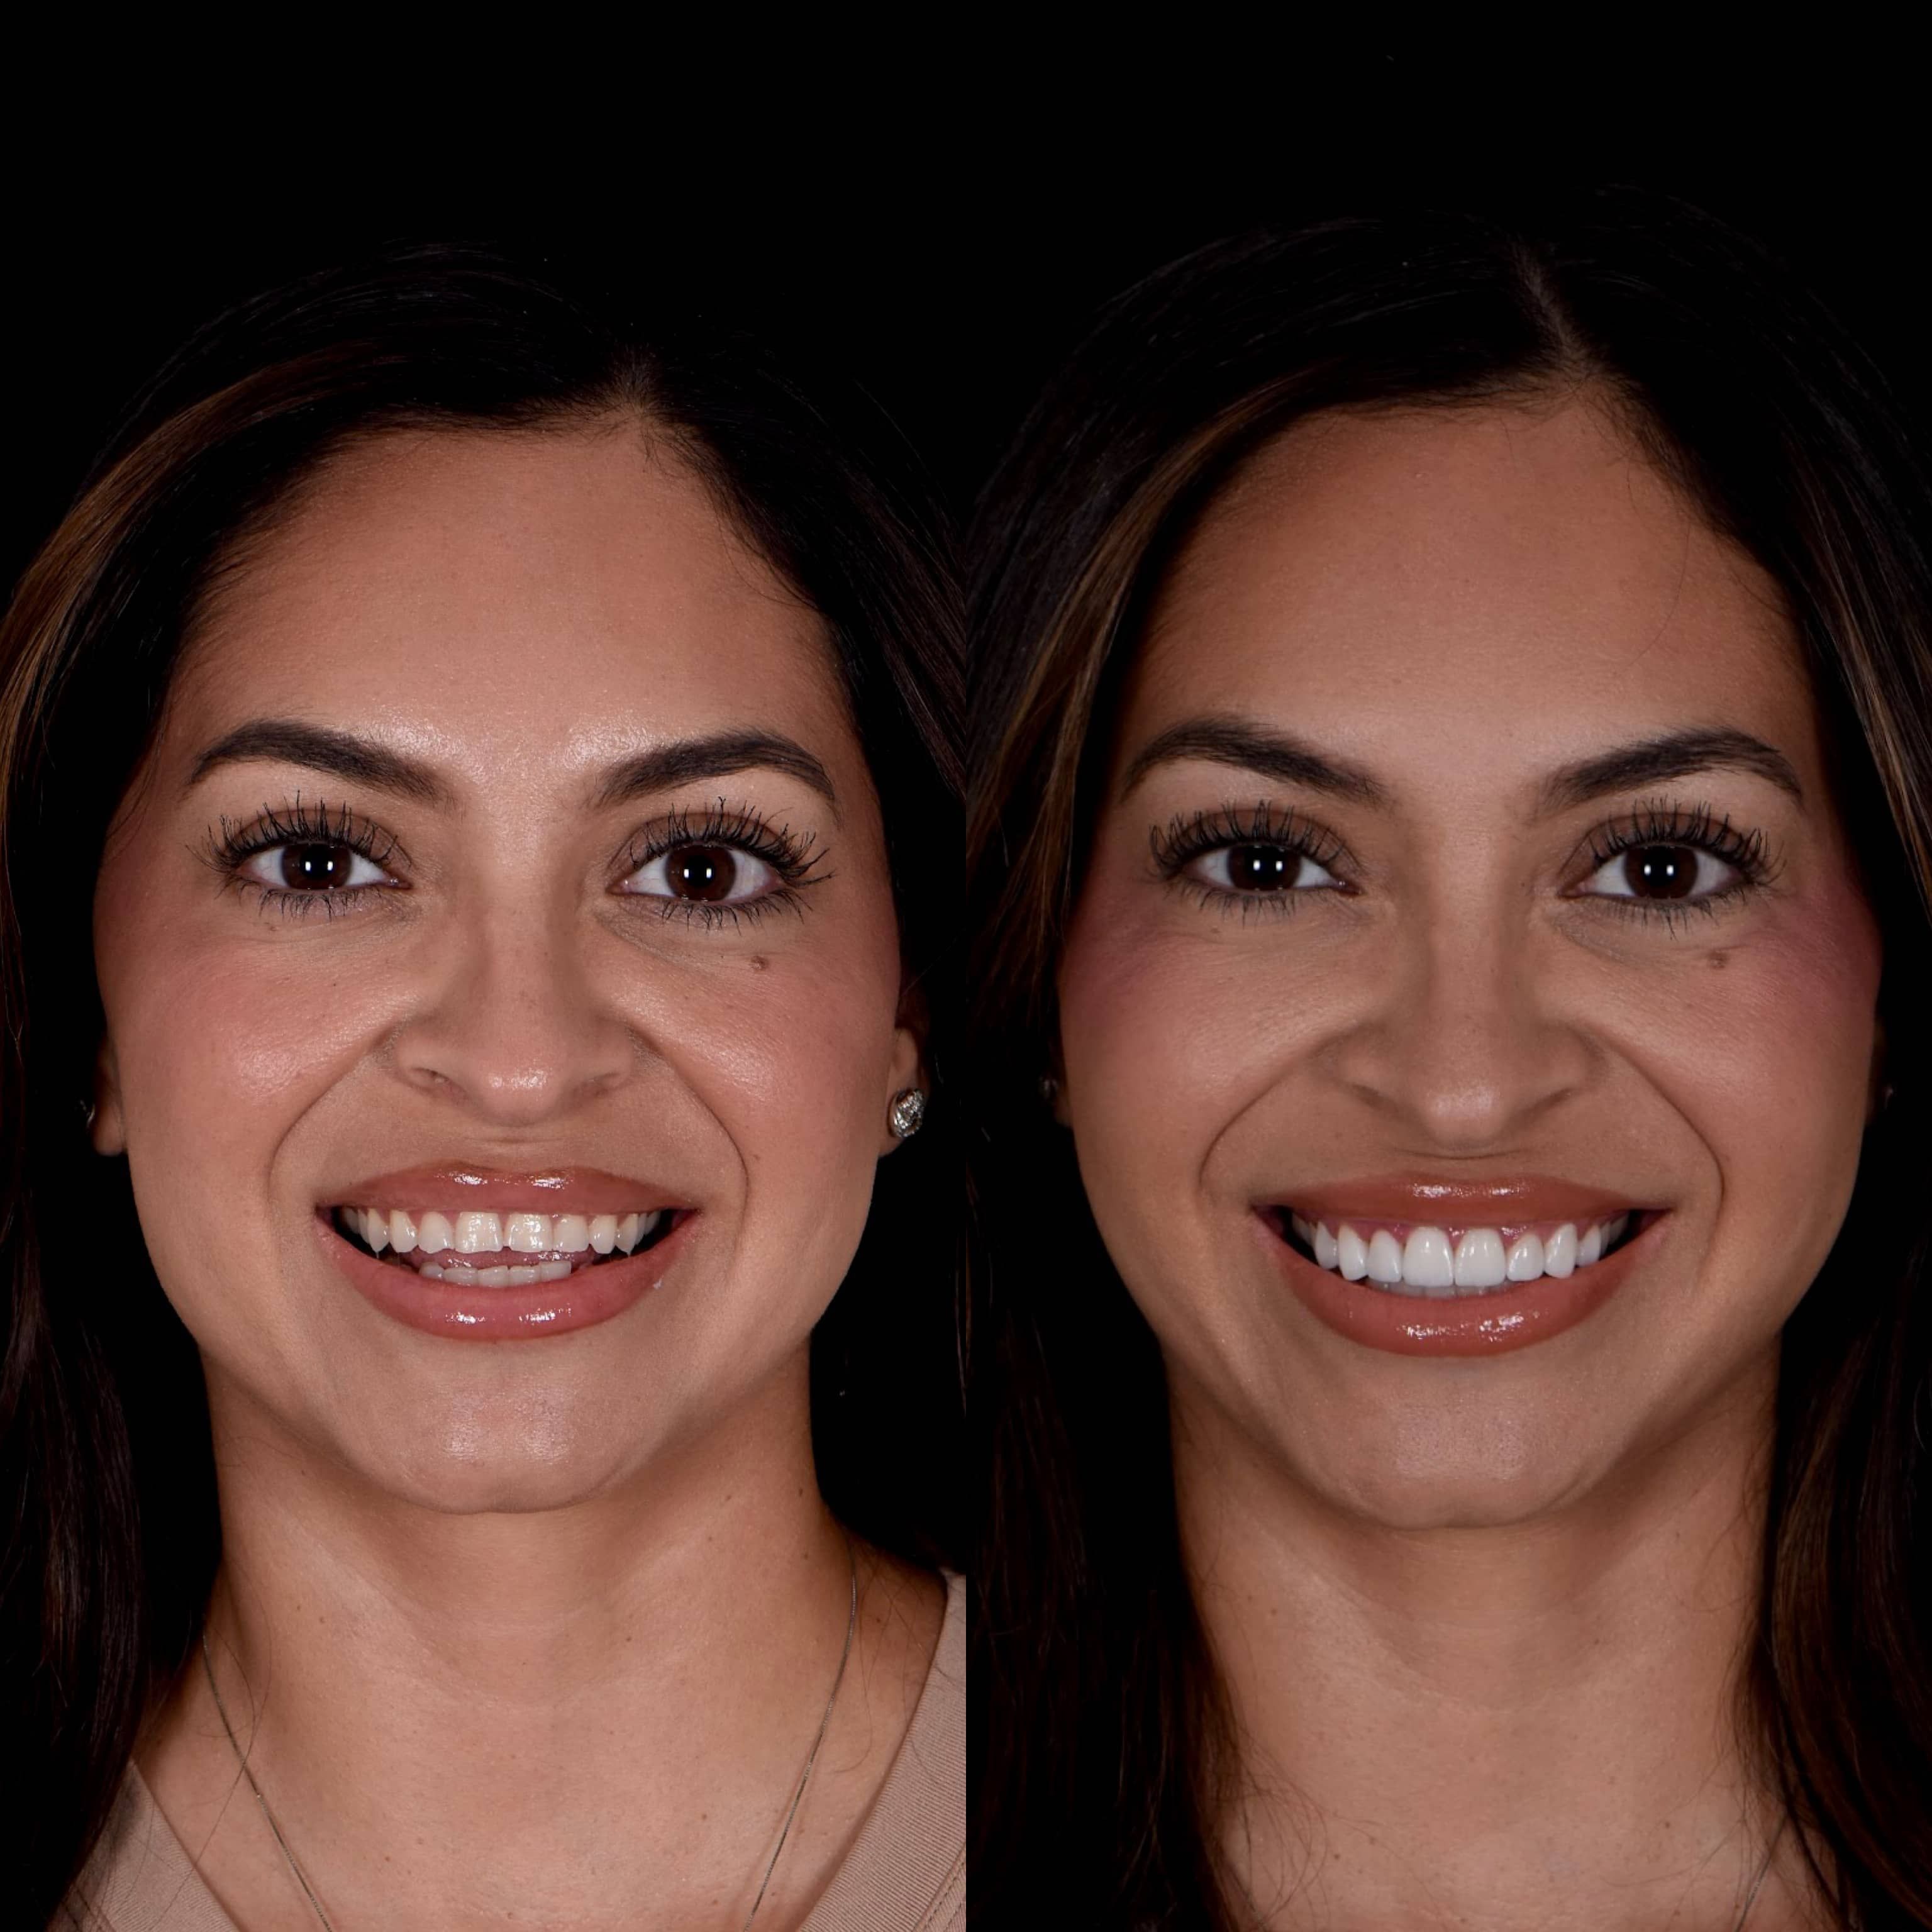 Before and after of veneers procedure by dentist in LA